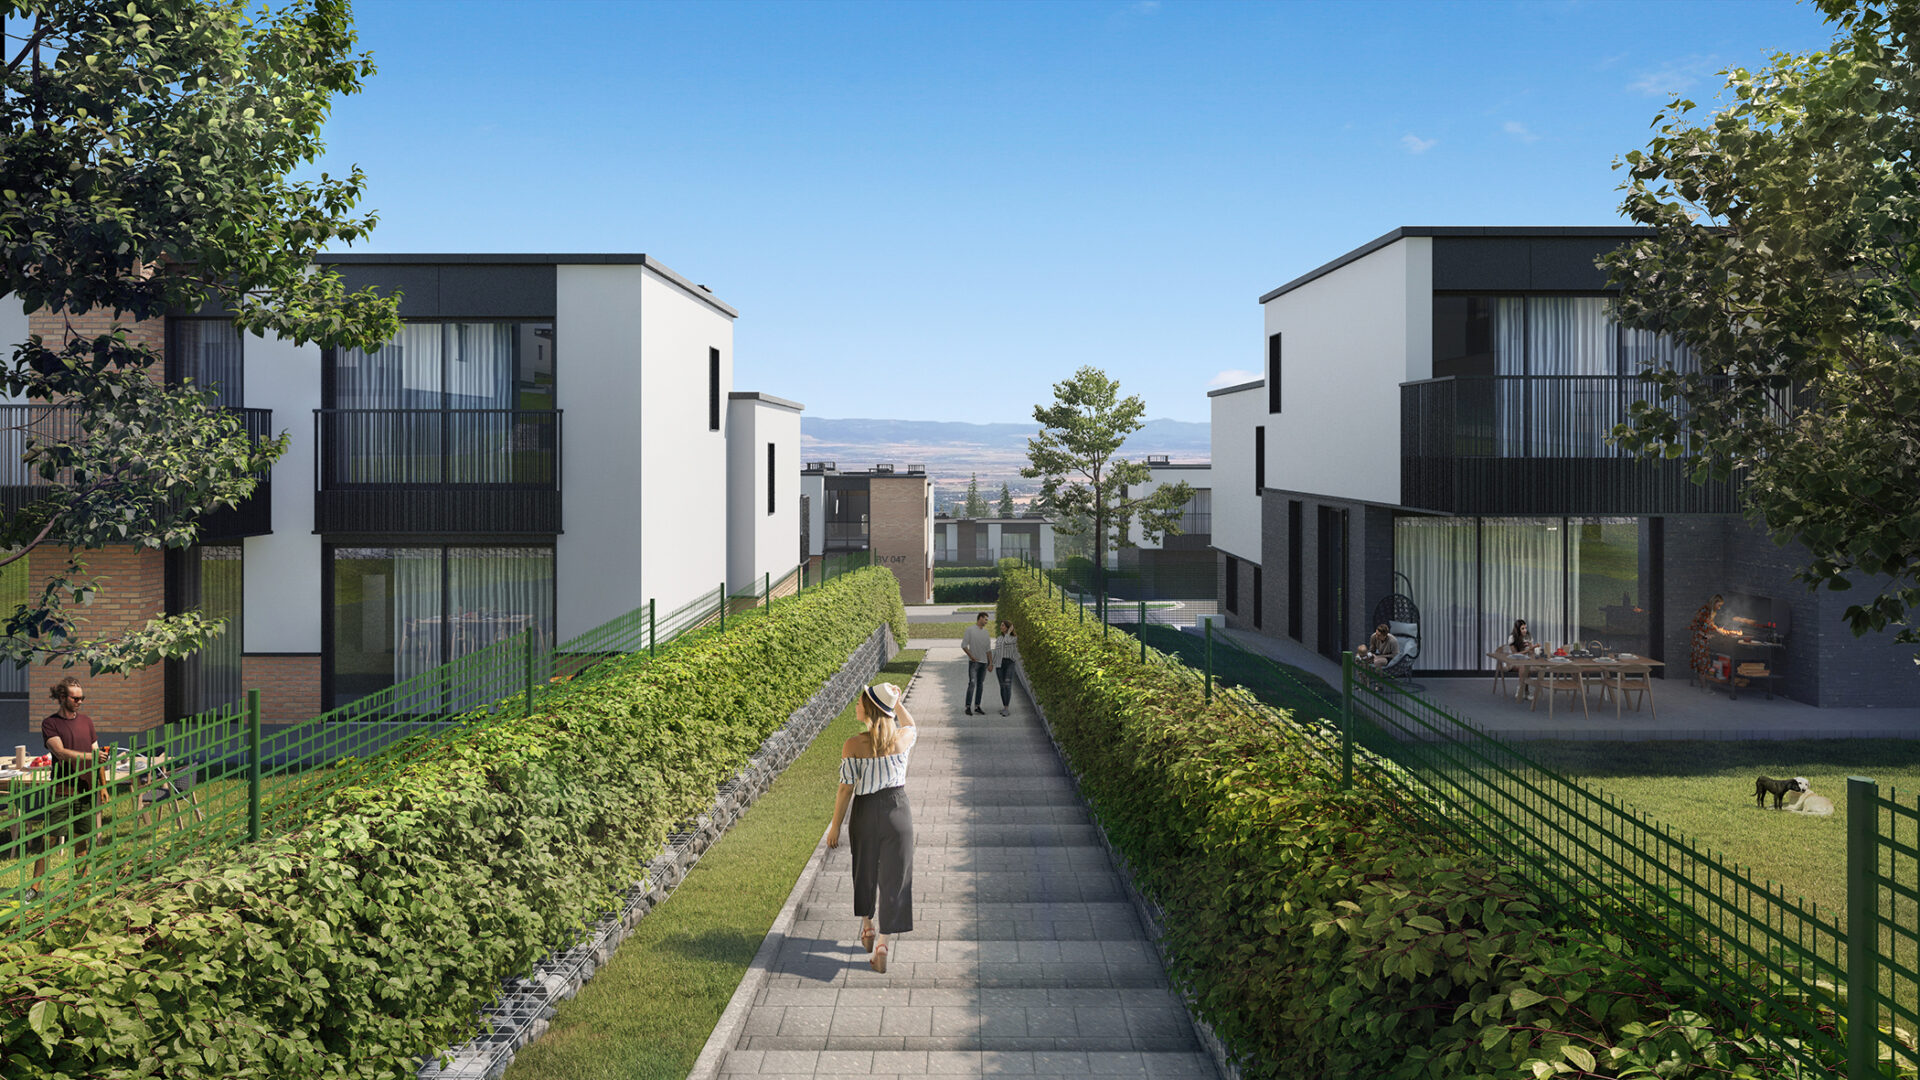 Rendering of Bistritsa Villas Community Plan by MBB Architects. Landscape architecture by RKLA.